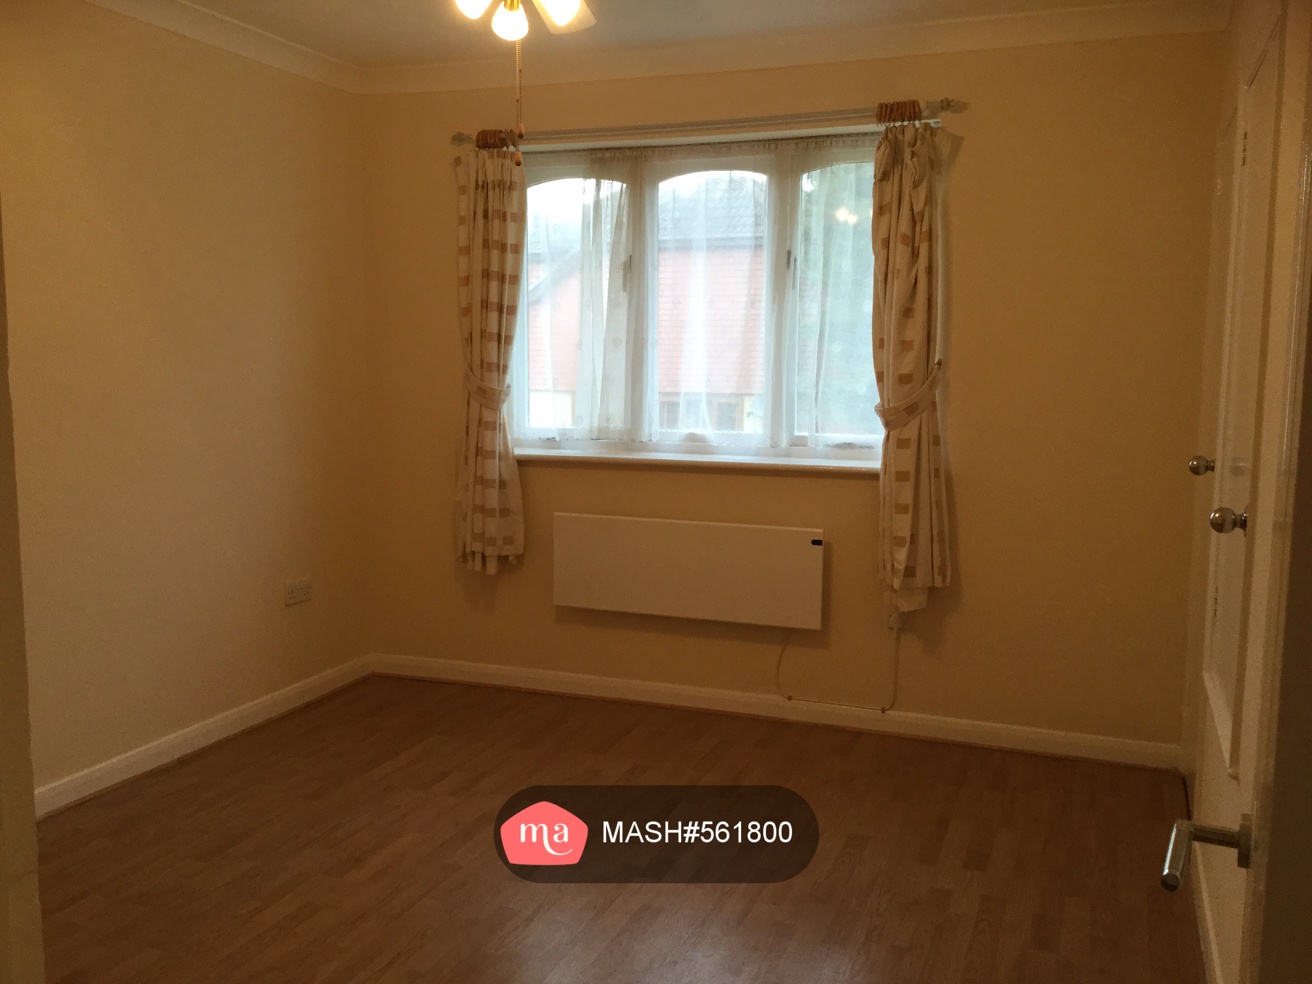 1 Bedroom Flat to rent in Sittingbourne - Mashroom